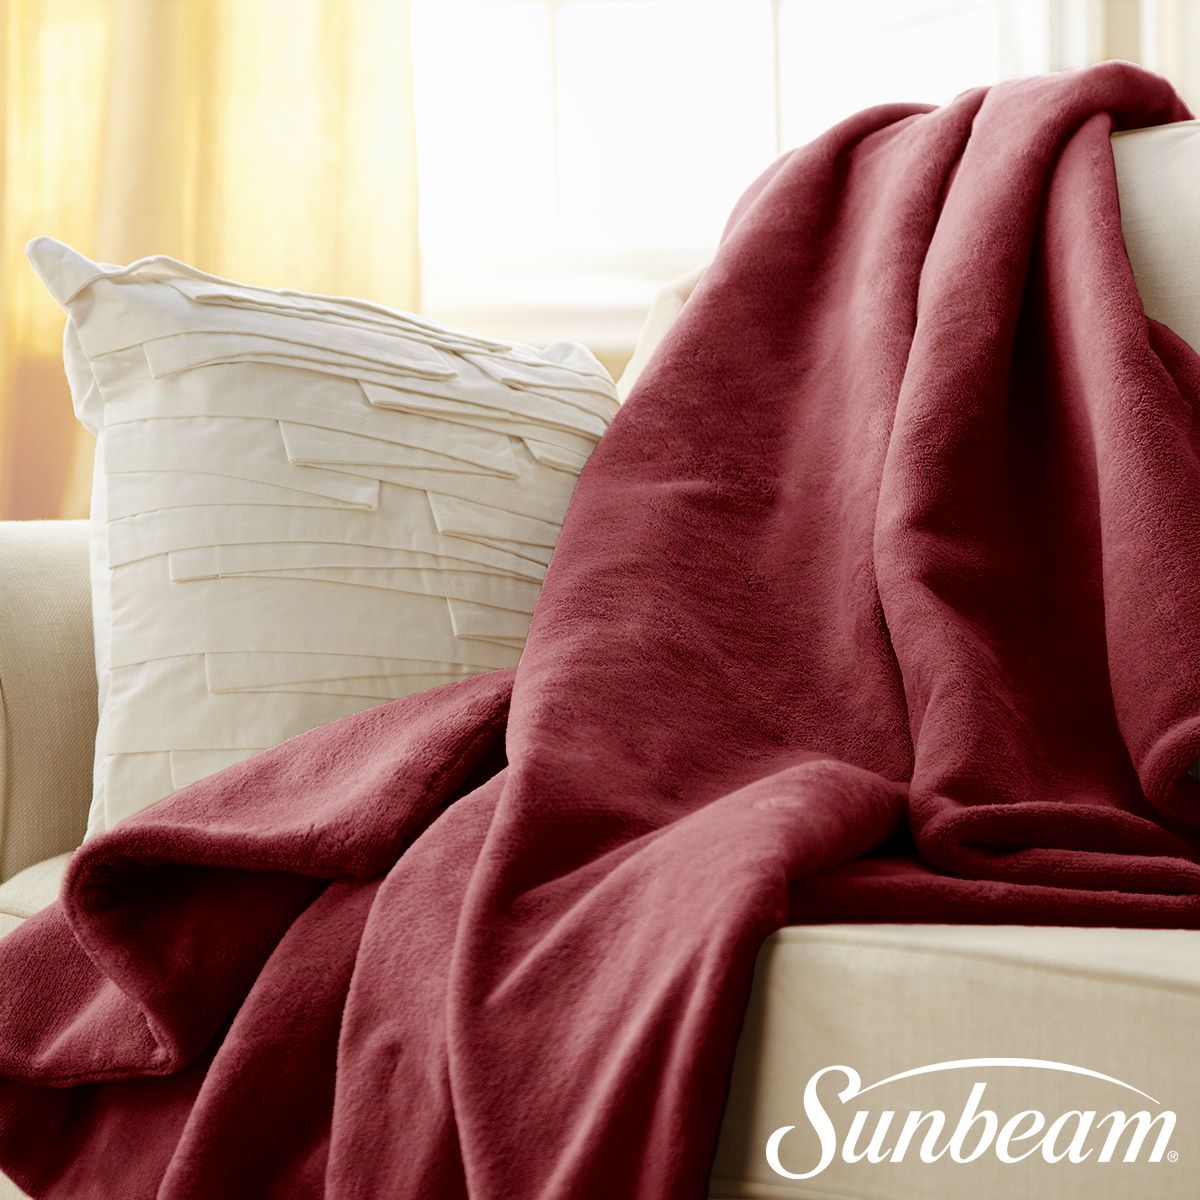 Red Sunbeam Heated Blanket